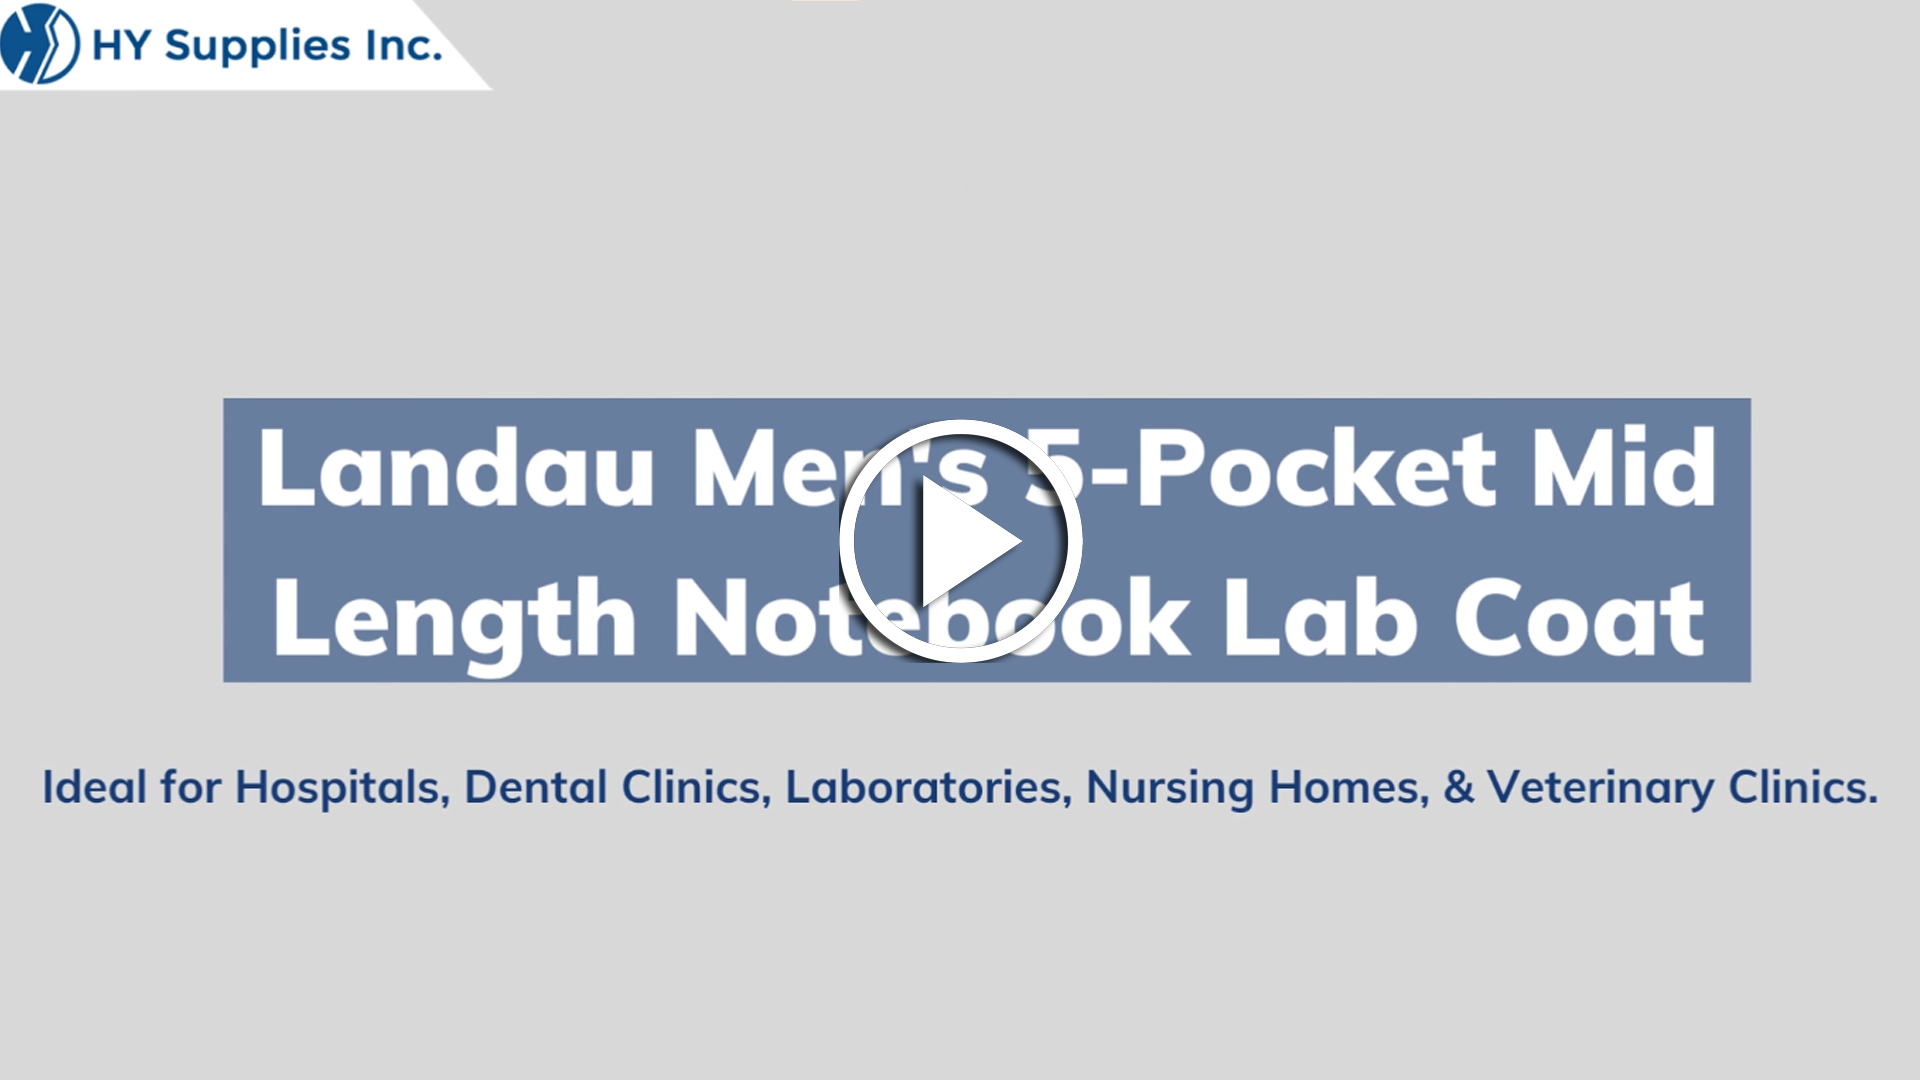 Landau Mens 5-Pocket Mid-Length Notebook Lab Coat